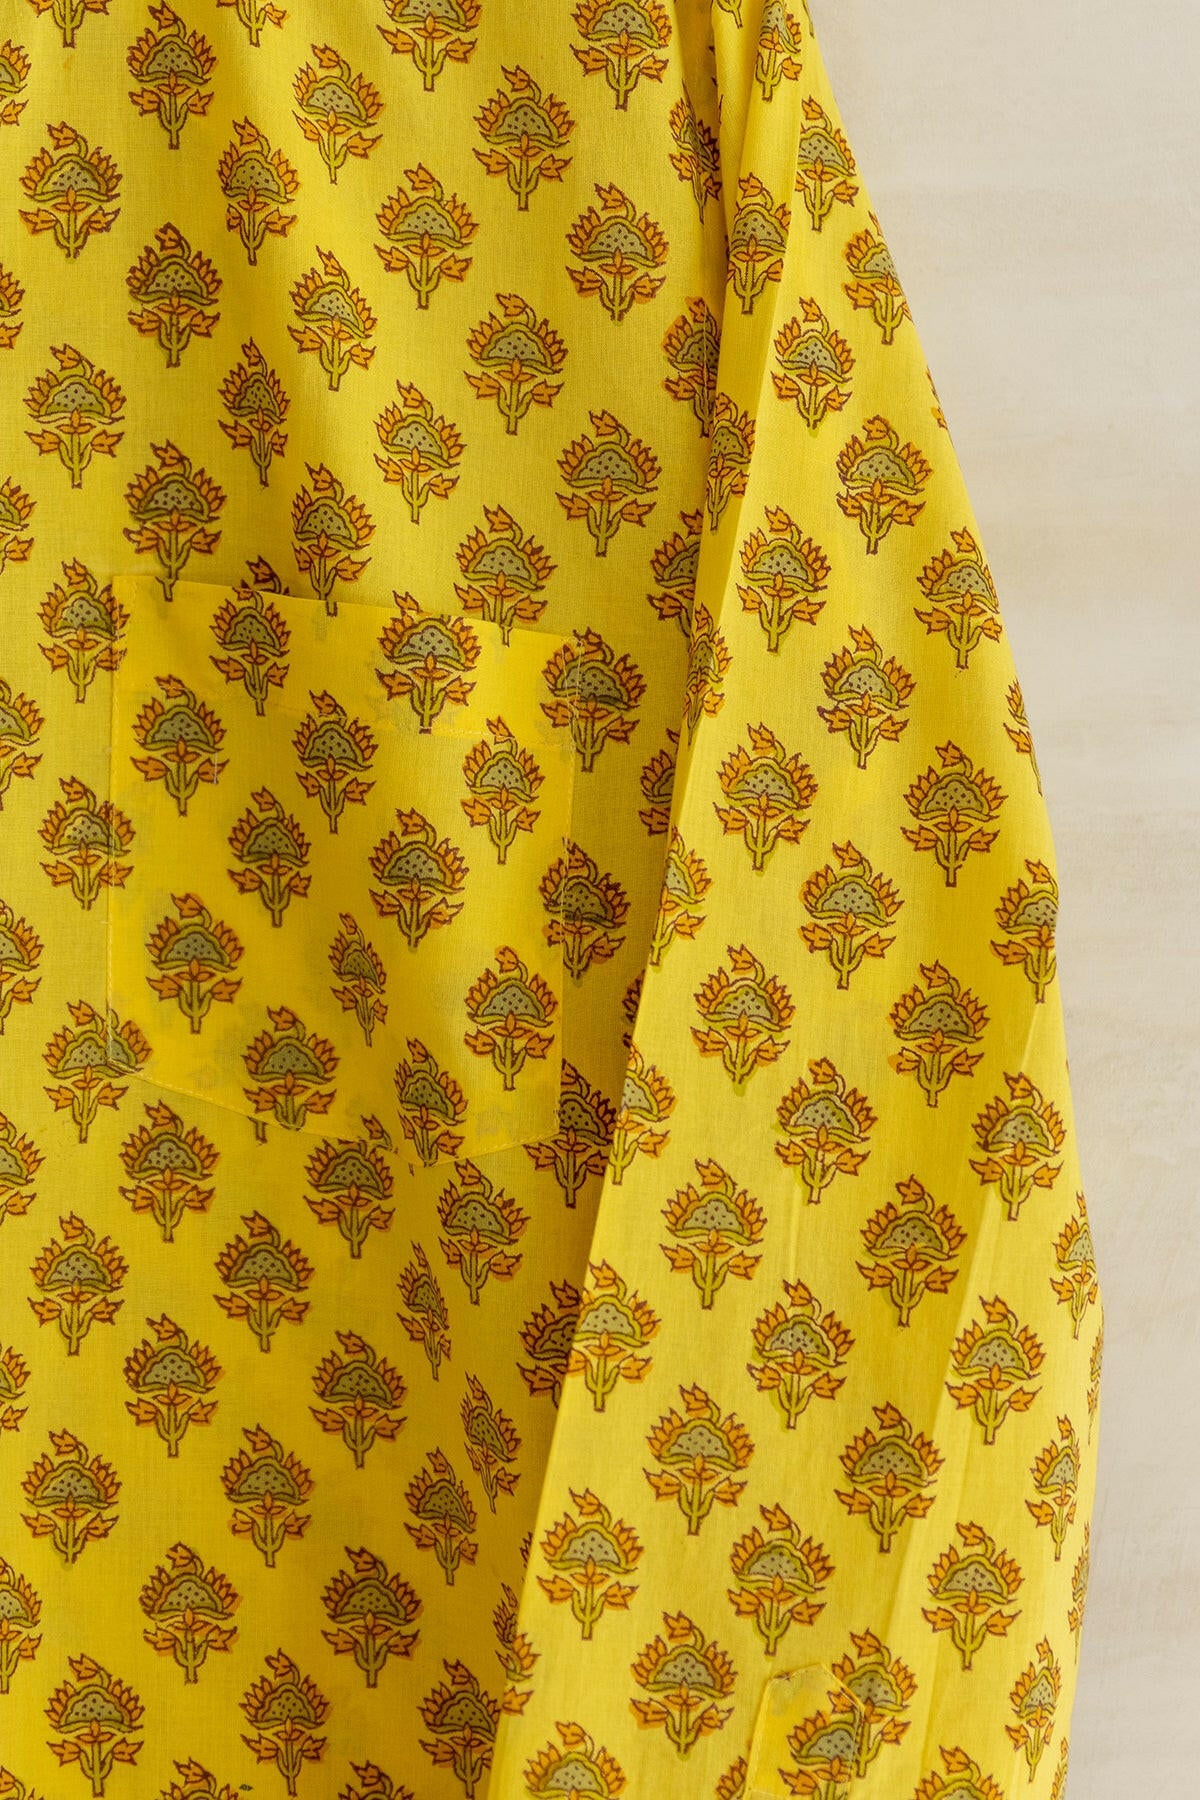 Yellow Cotton Hand Block Printed Men's Shirt